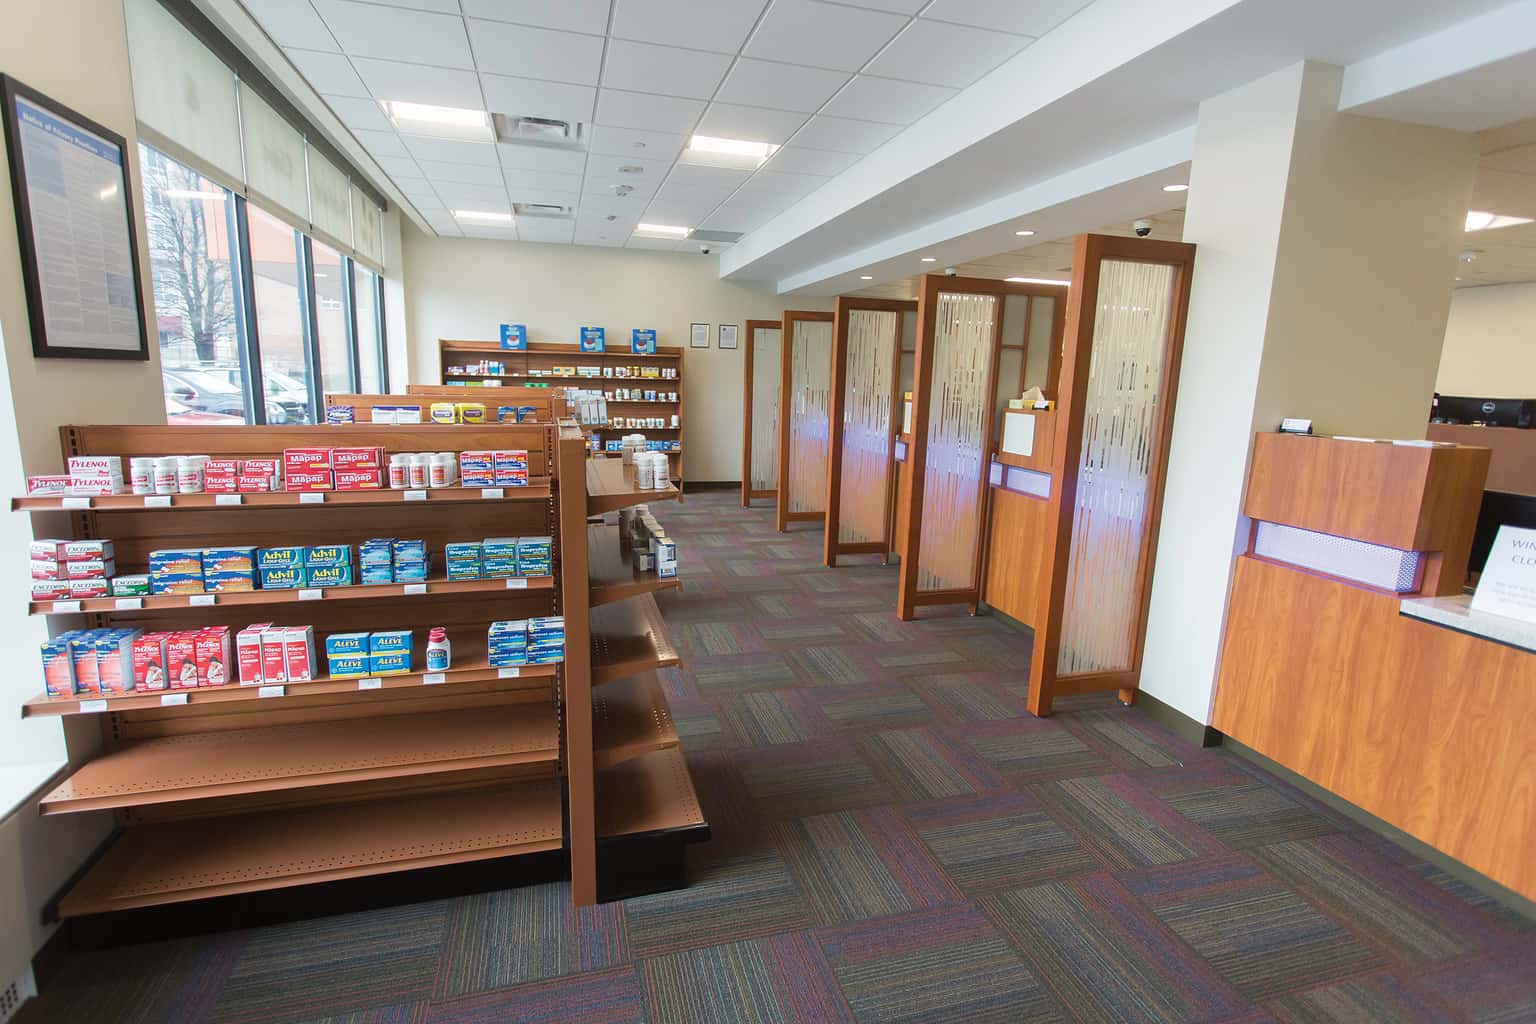 richfield pharmacy hallway with shelves